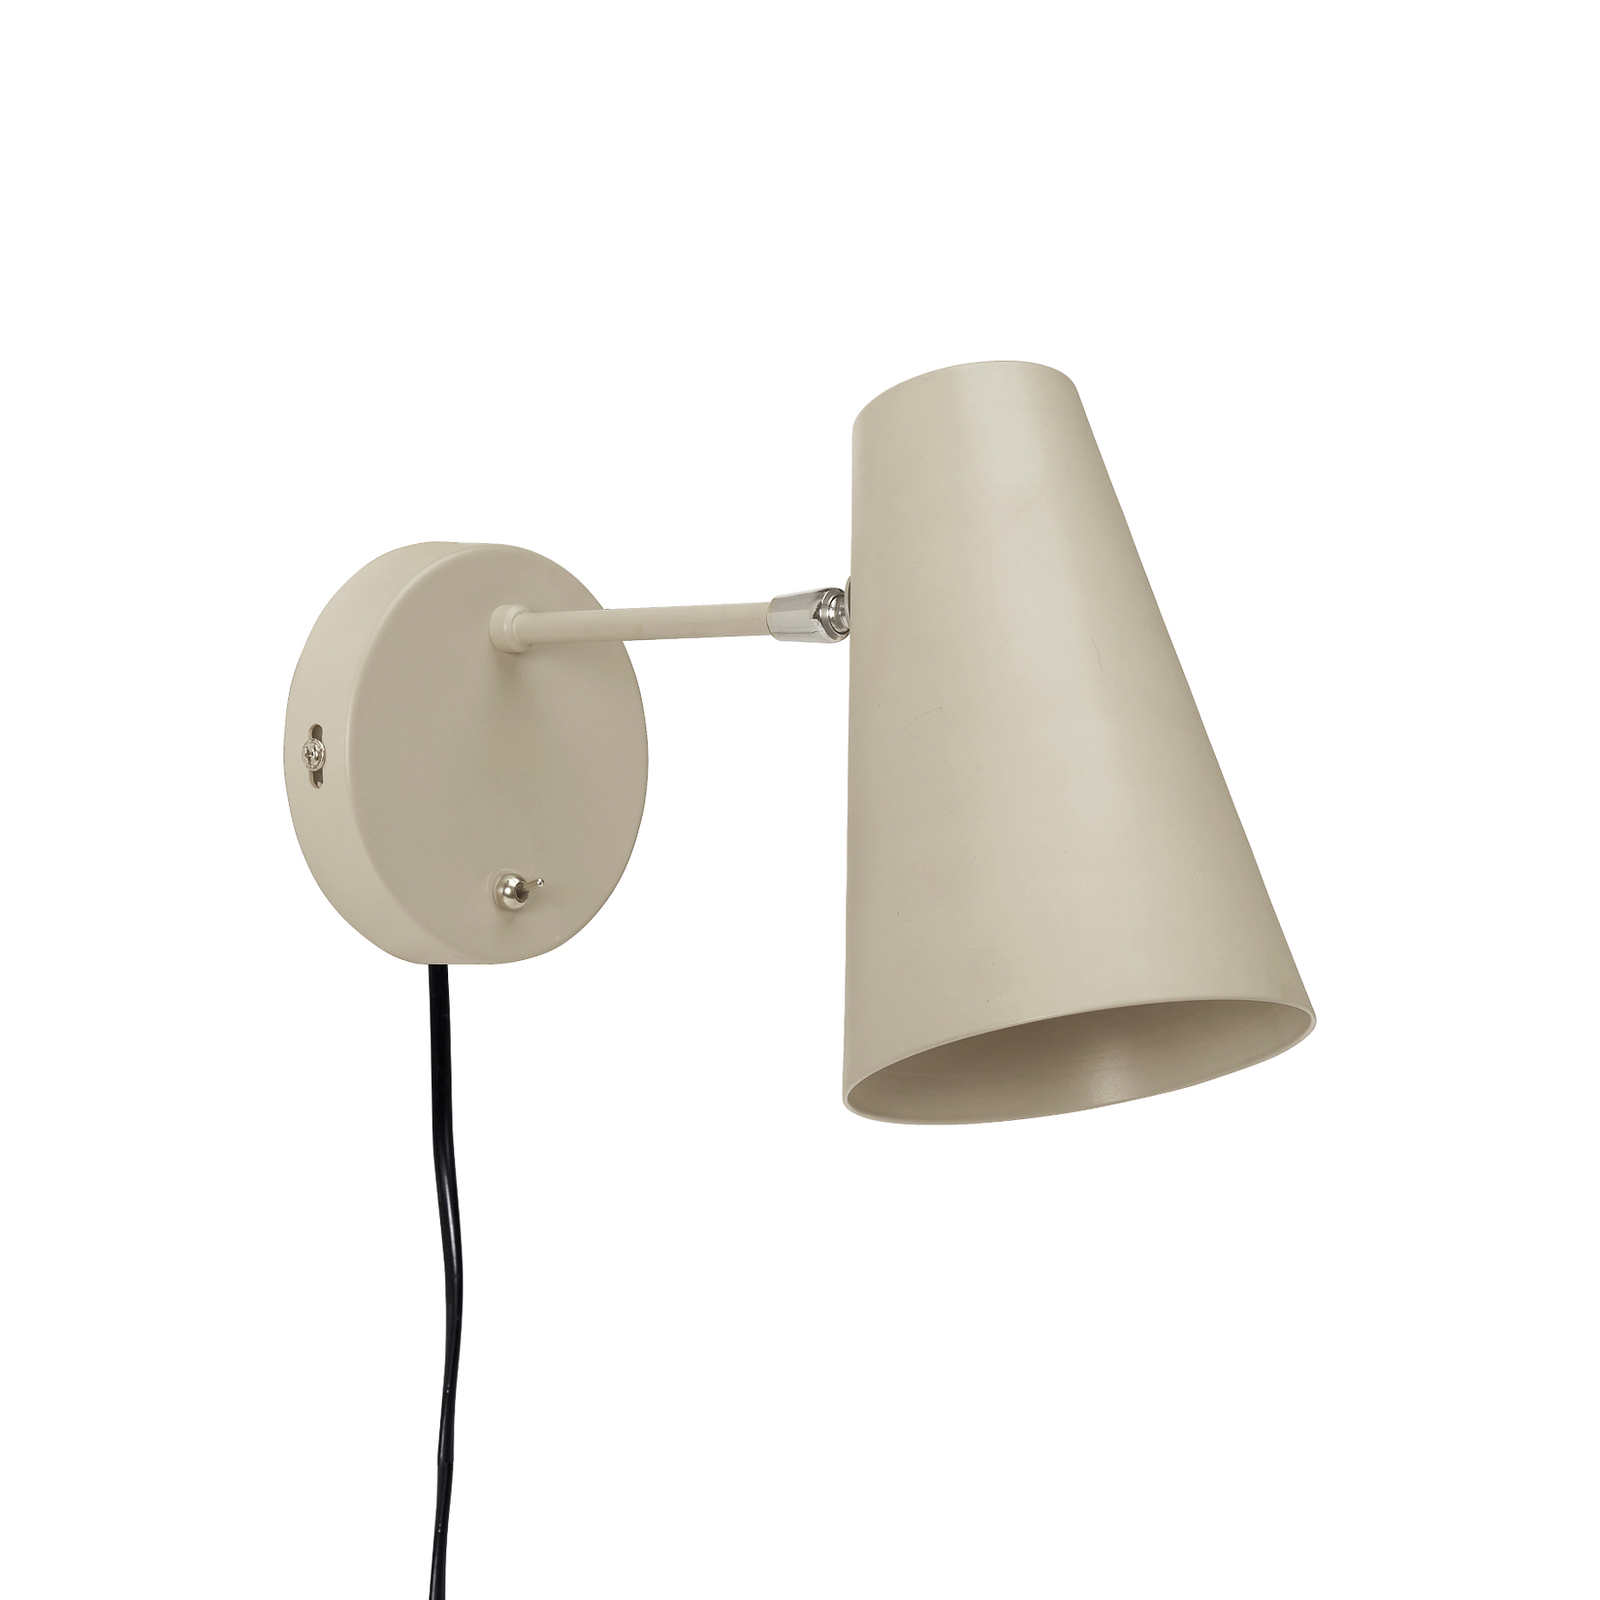 PR Home Cornet wall light with a plug, beige